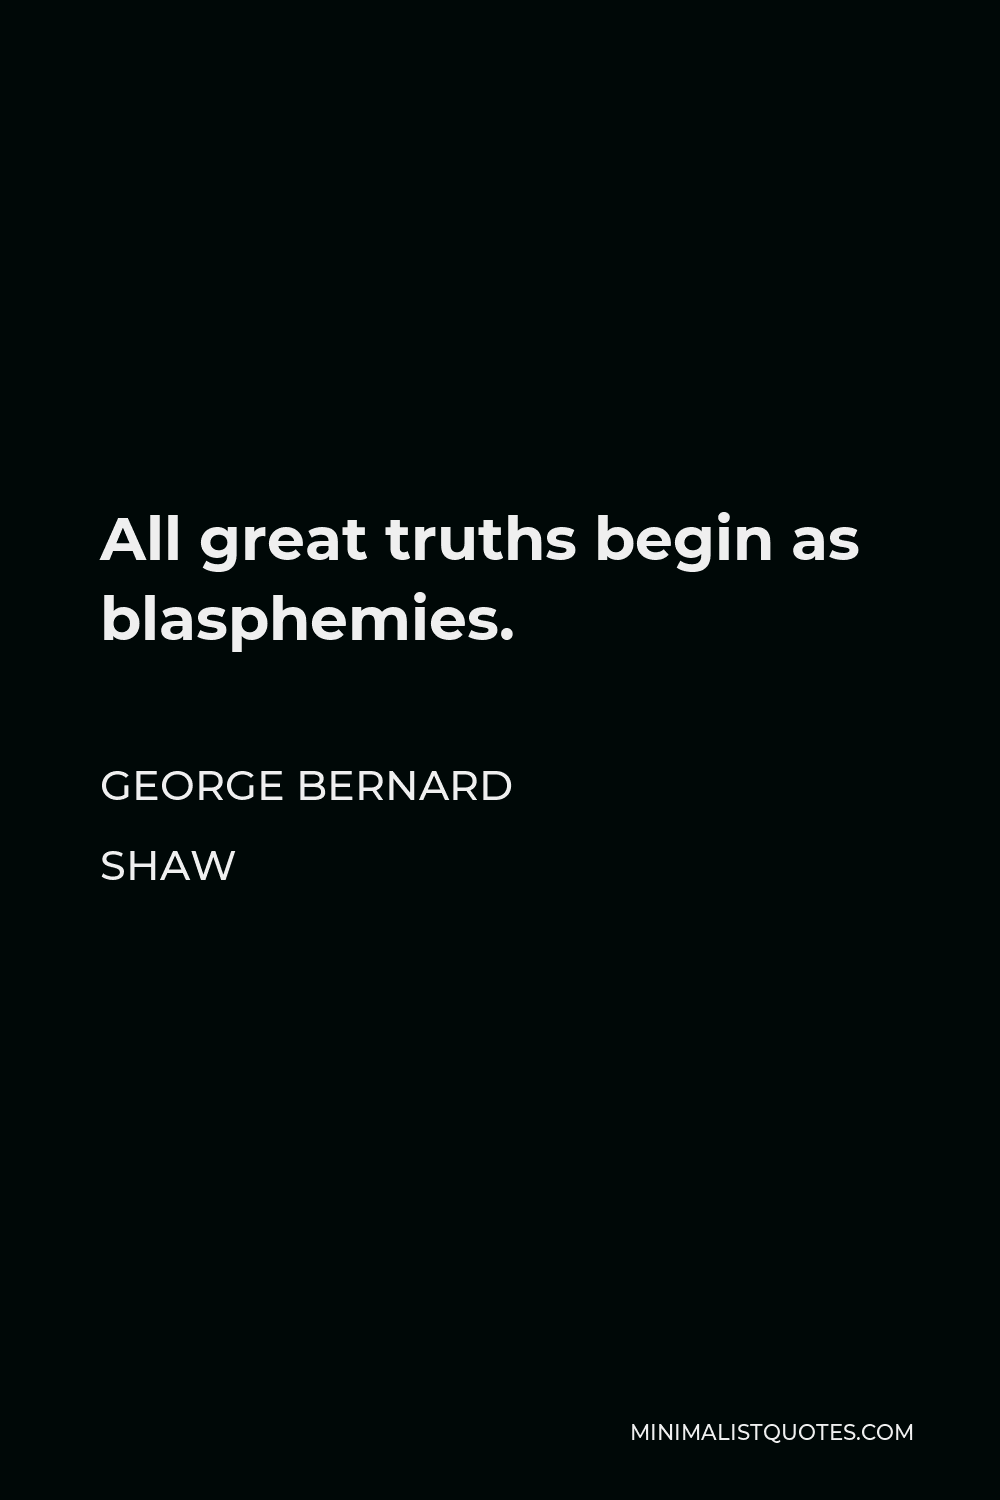 George Bernard Shaw Quote - All great truths begin as blasphemies.